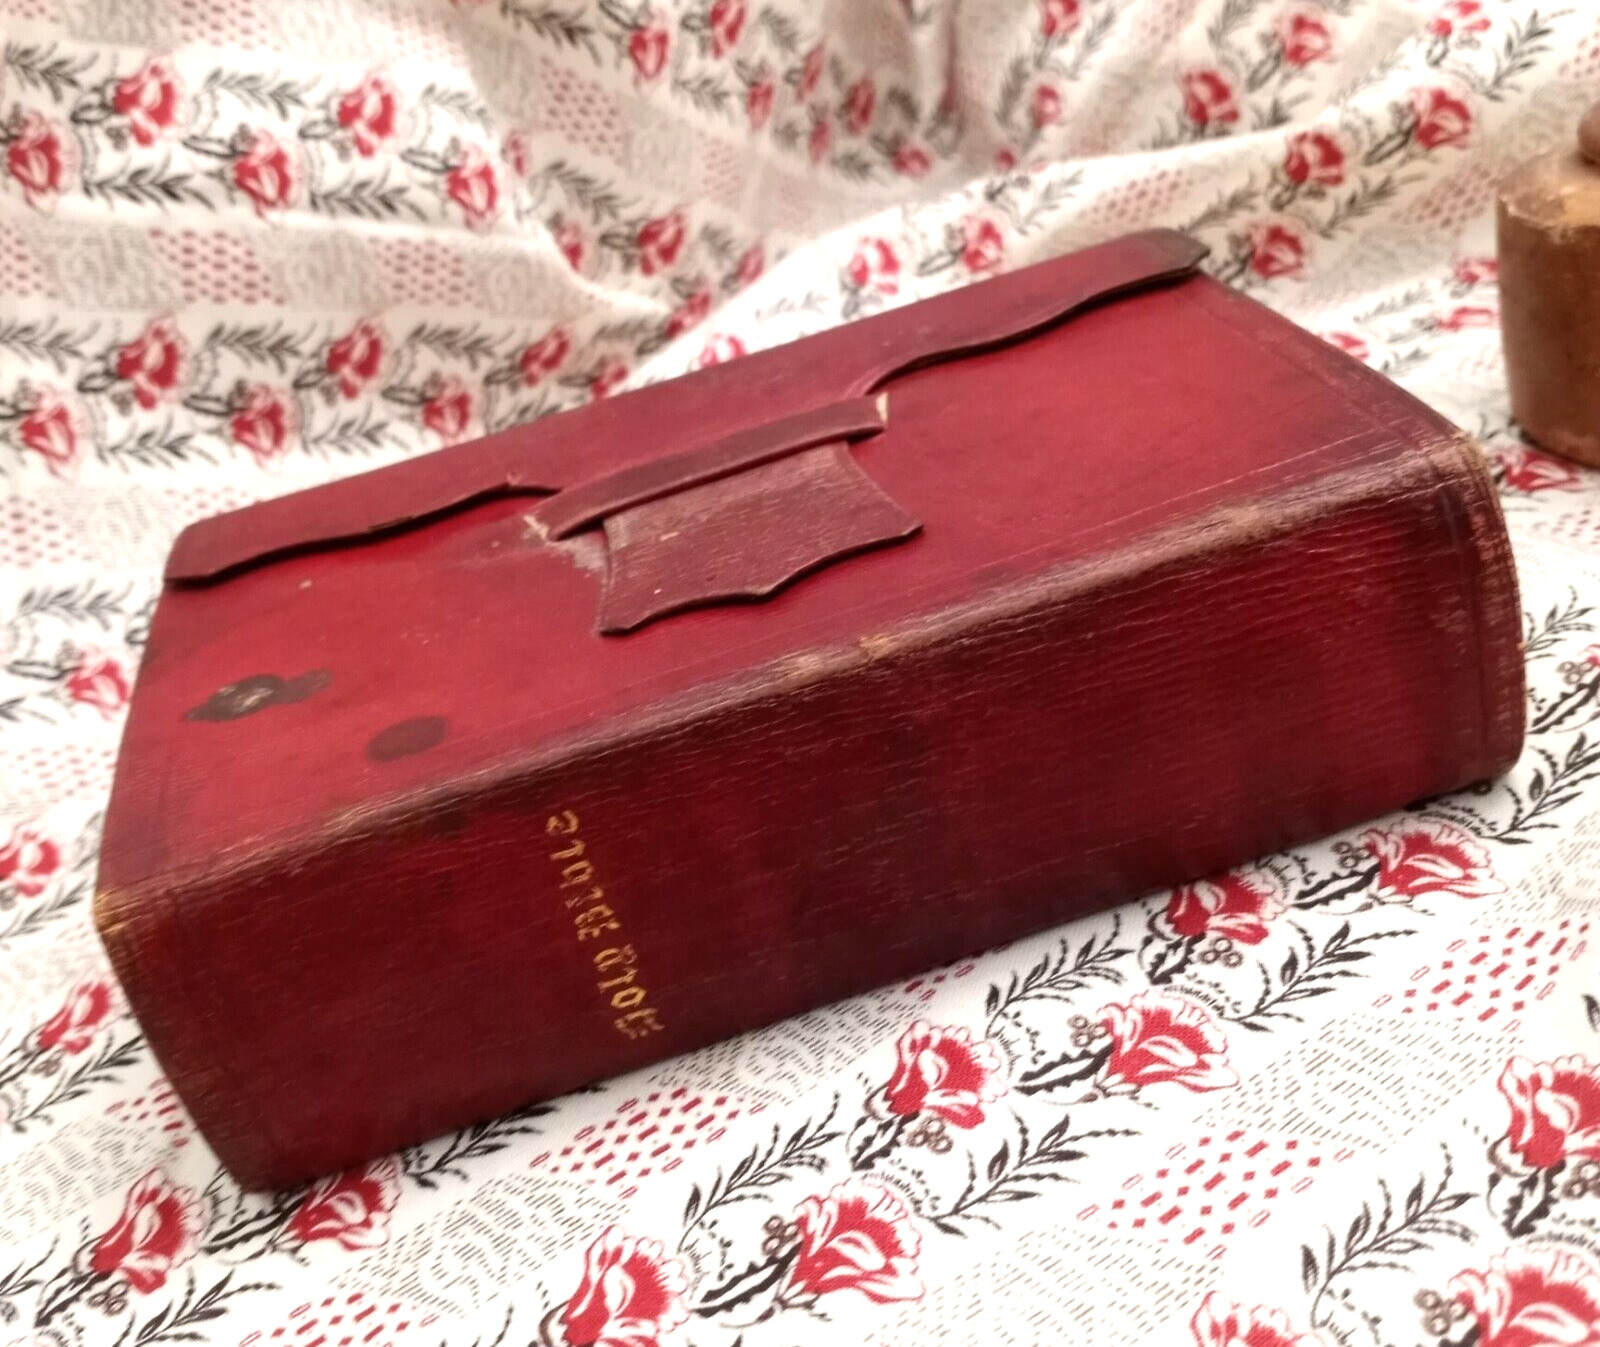 Civil War - 1849 Holy Bible - ID'd - Asst. Surgeon Hiram Ingerson- 115th N.Y.V.I